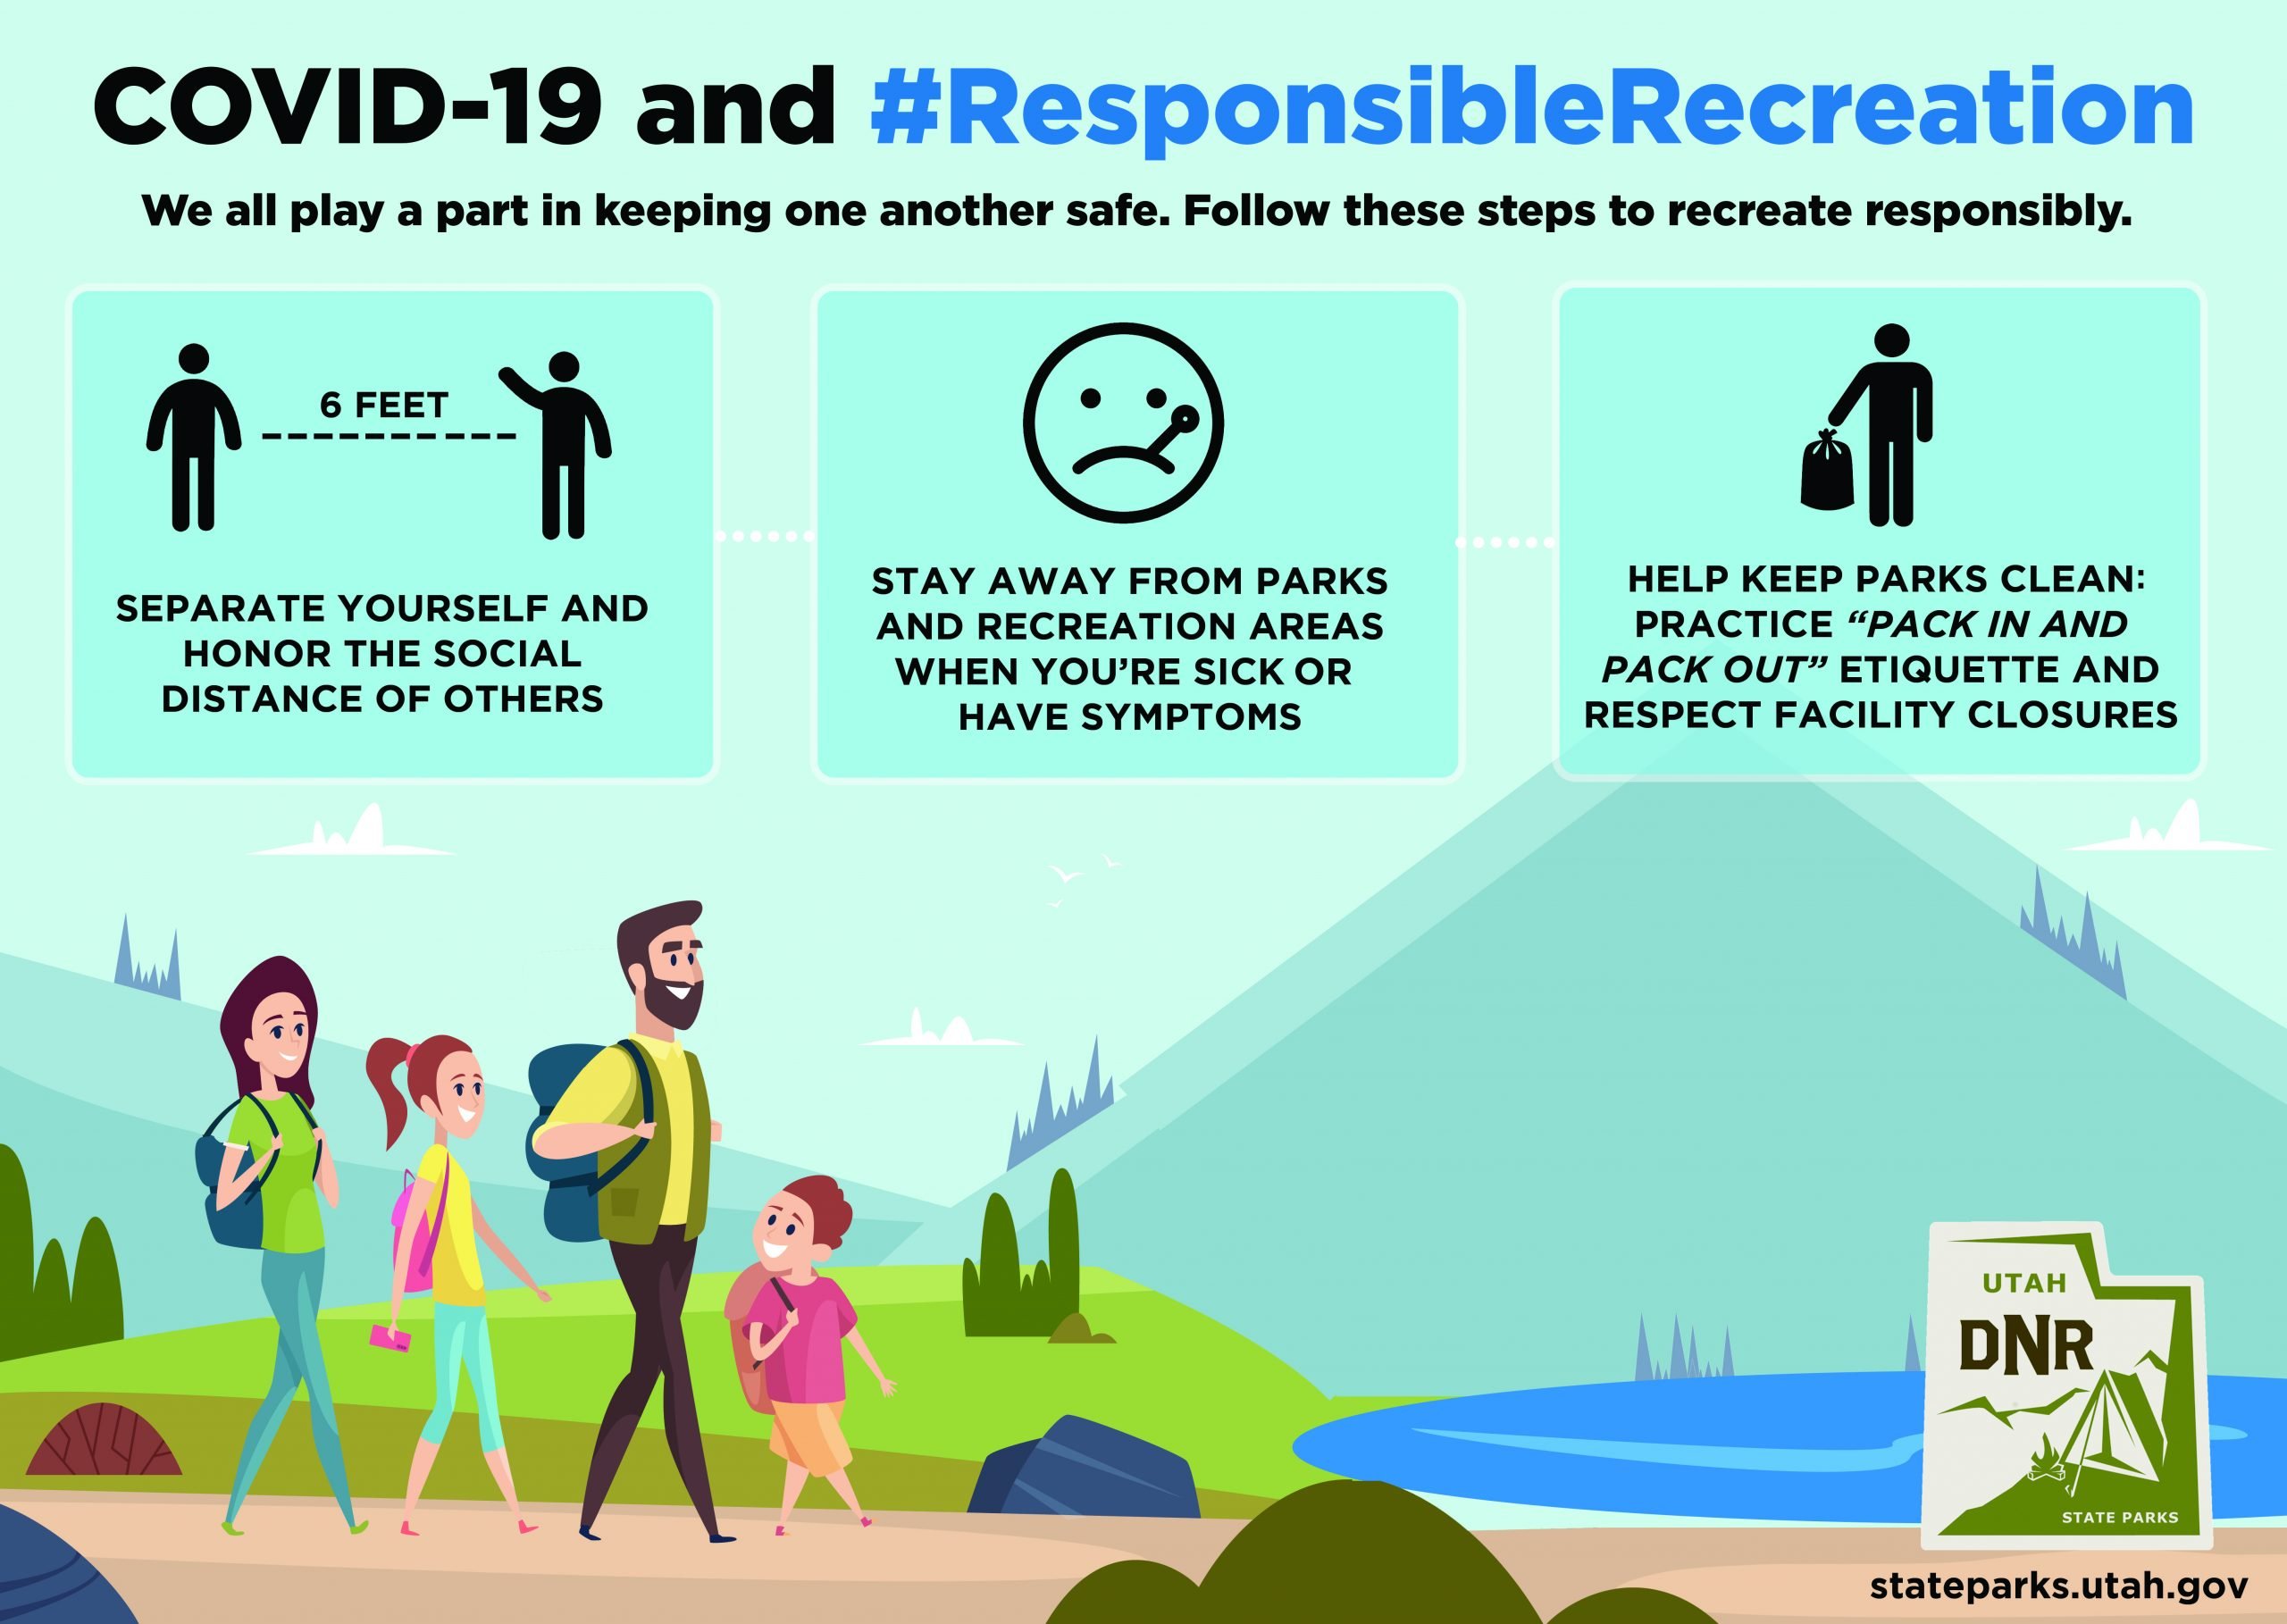 What is #ResponsibleRecreation?